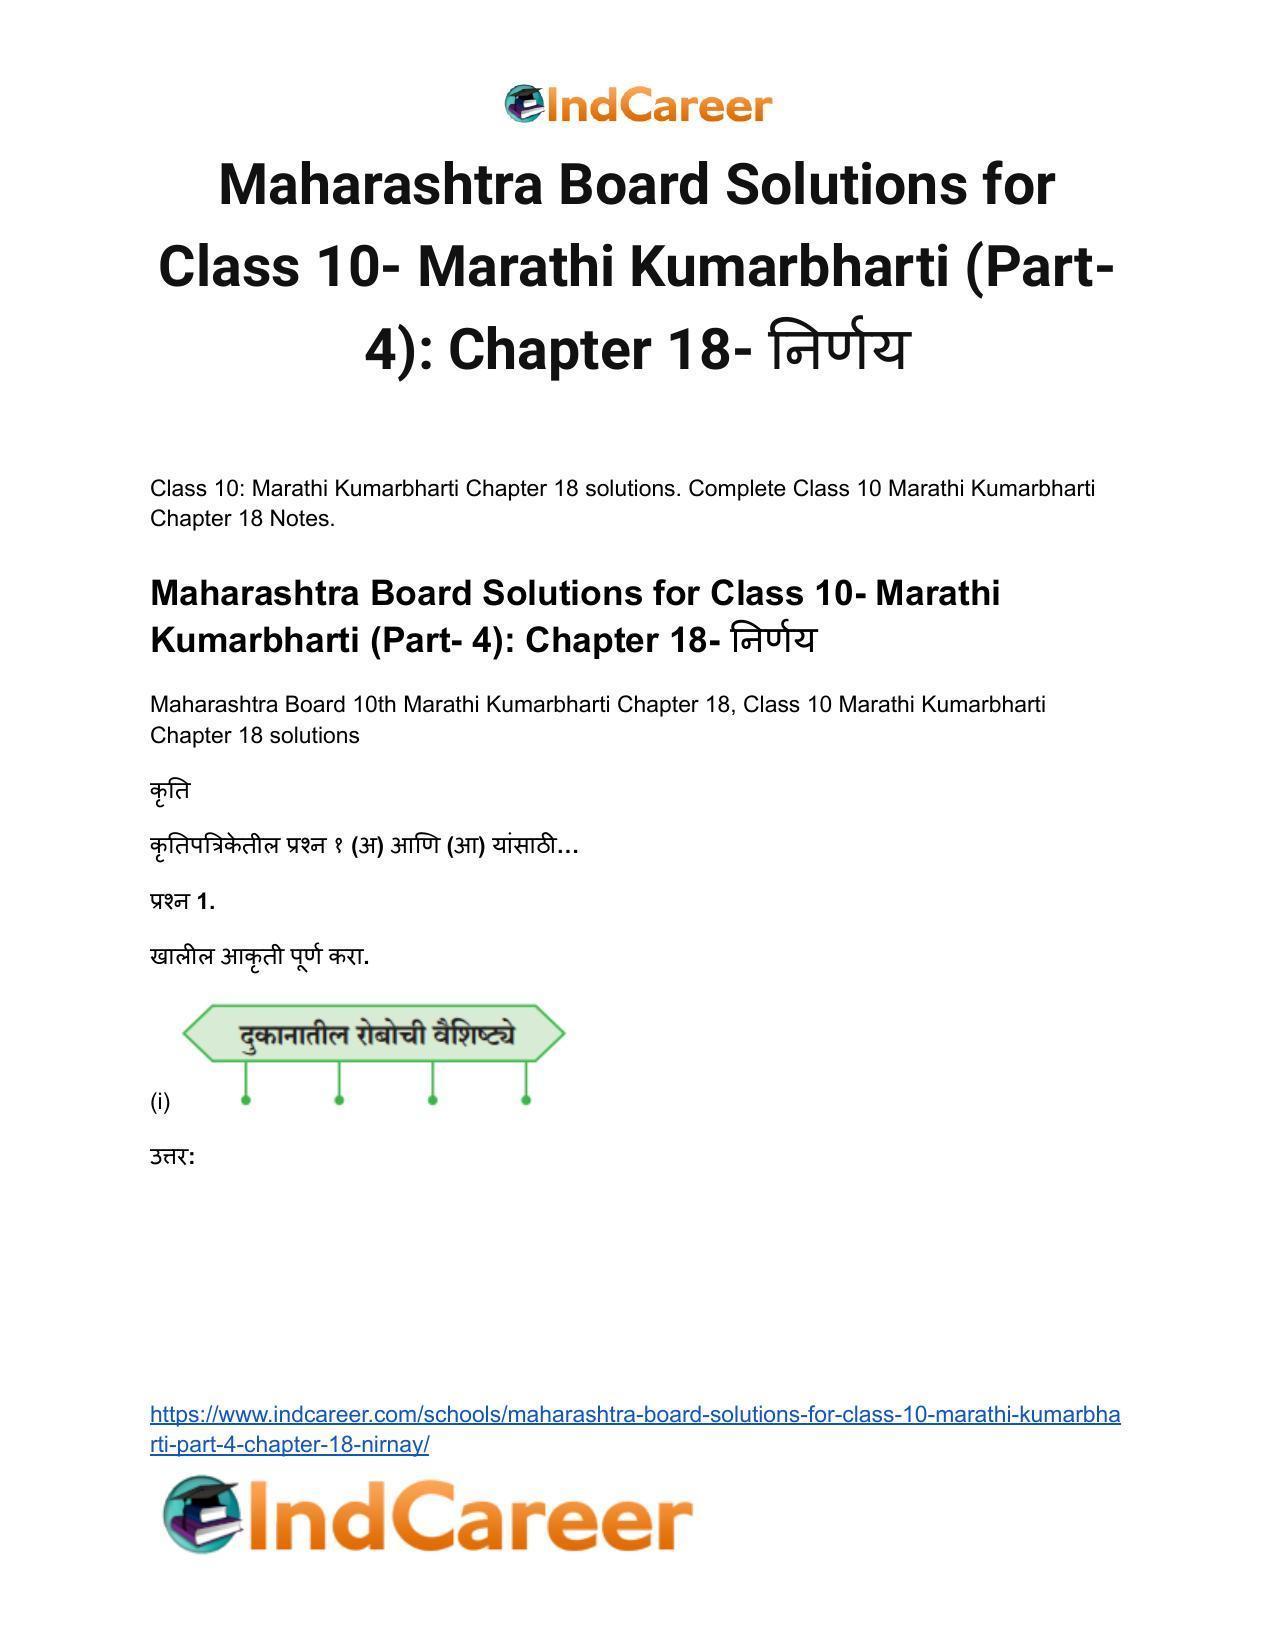 Maharashtra Board Solutions for Class 10- Marathi Kumarbharti (Part- 4): Chapter 18- निर्णय - Page 2